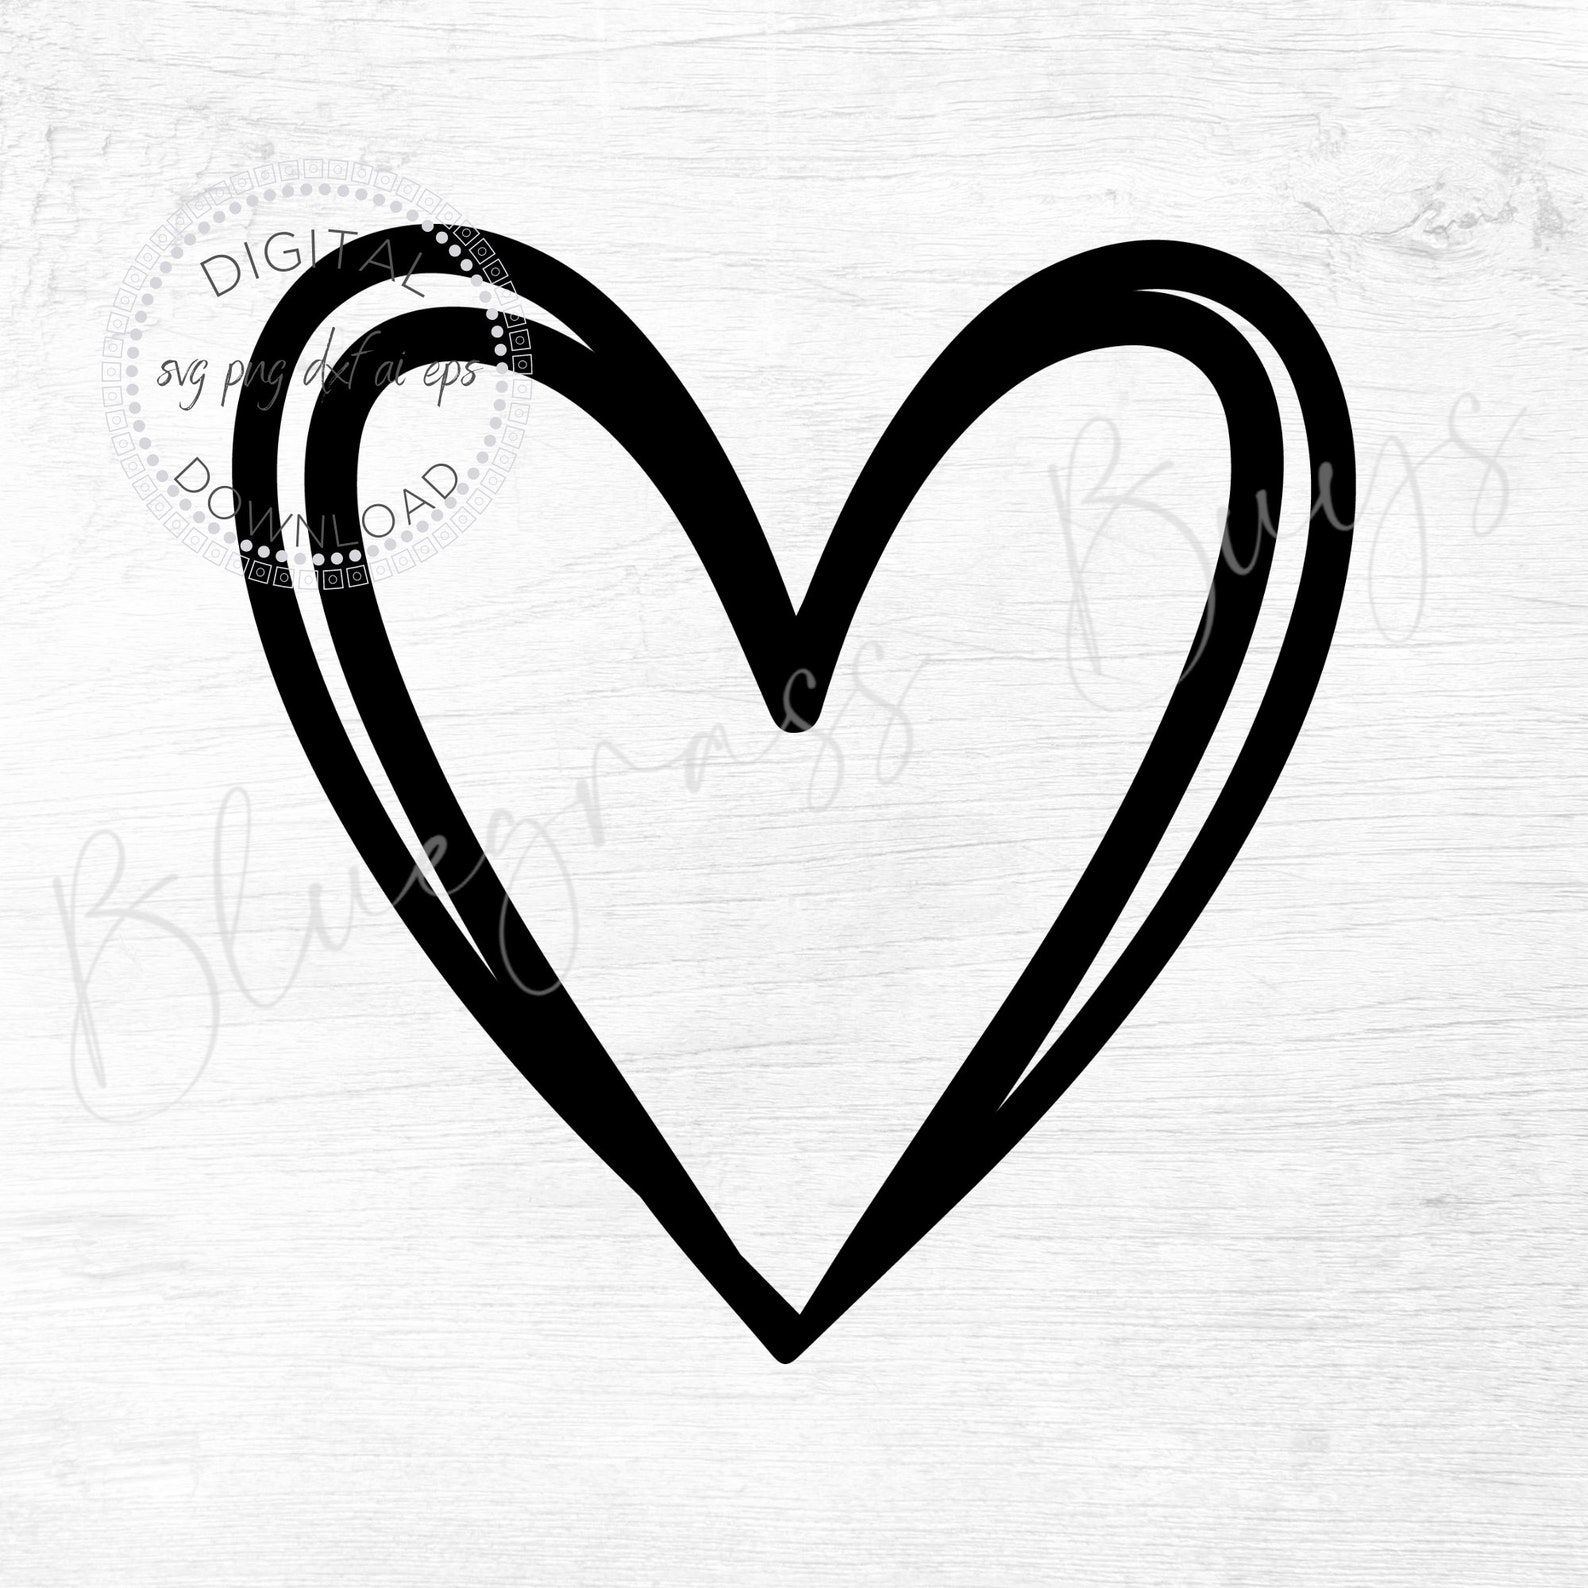 Double Heart SVG Heart Outline Cut File Heart Clipart - Etsy